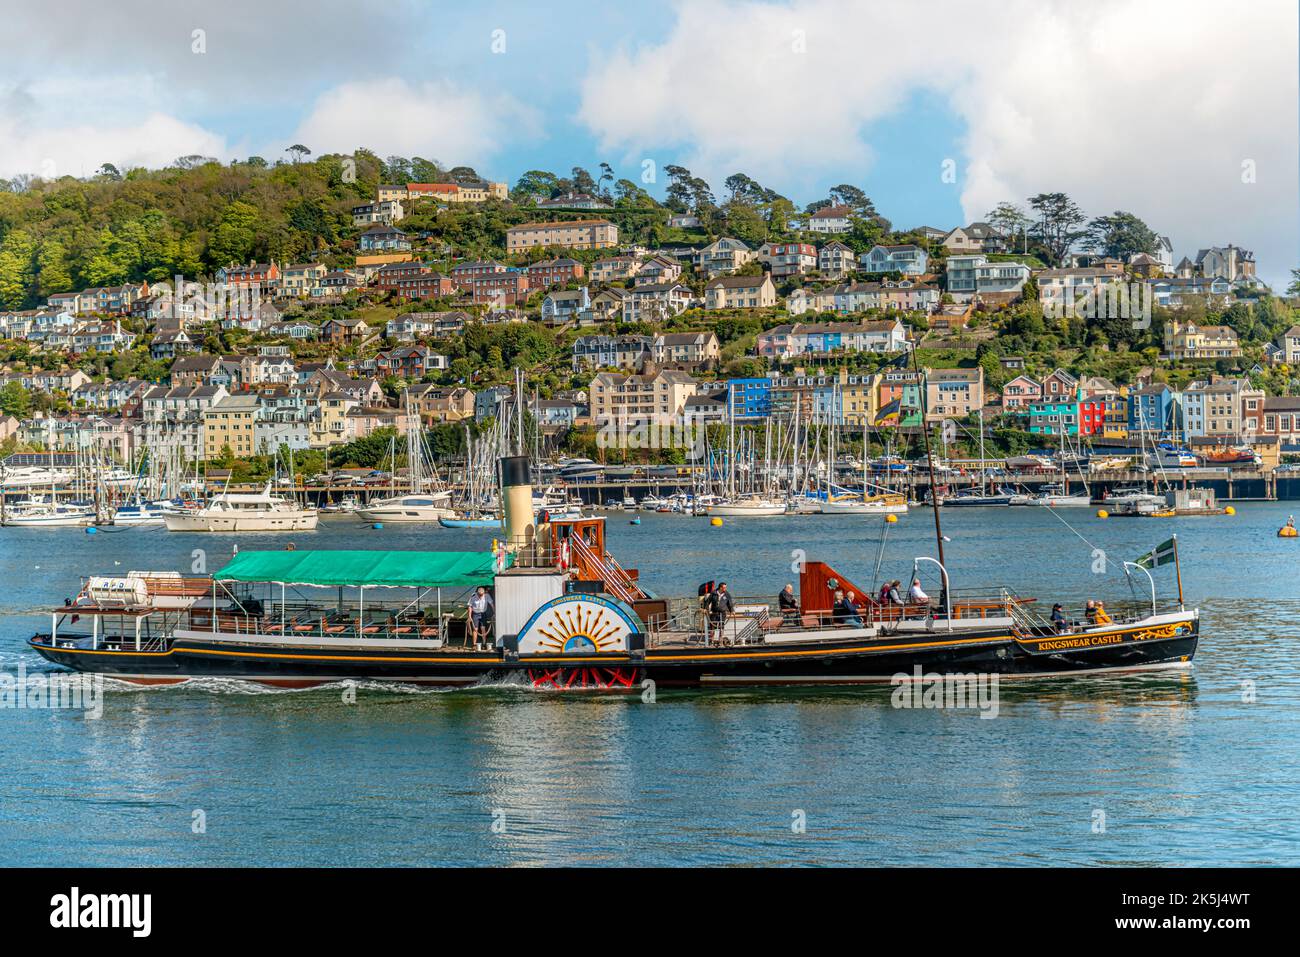 Kingswear castle paddle steamer at Dartmouth Harbor, Devon, England, UK Stock Photo